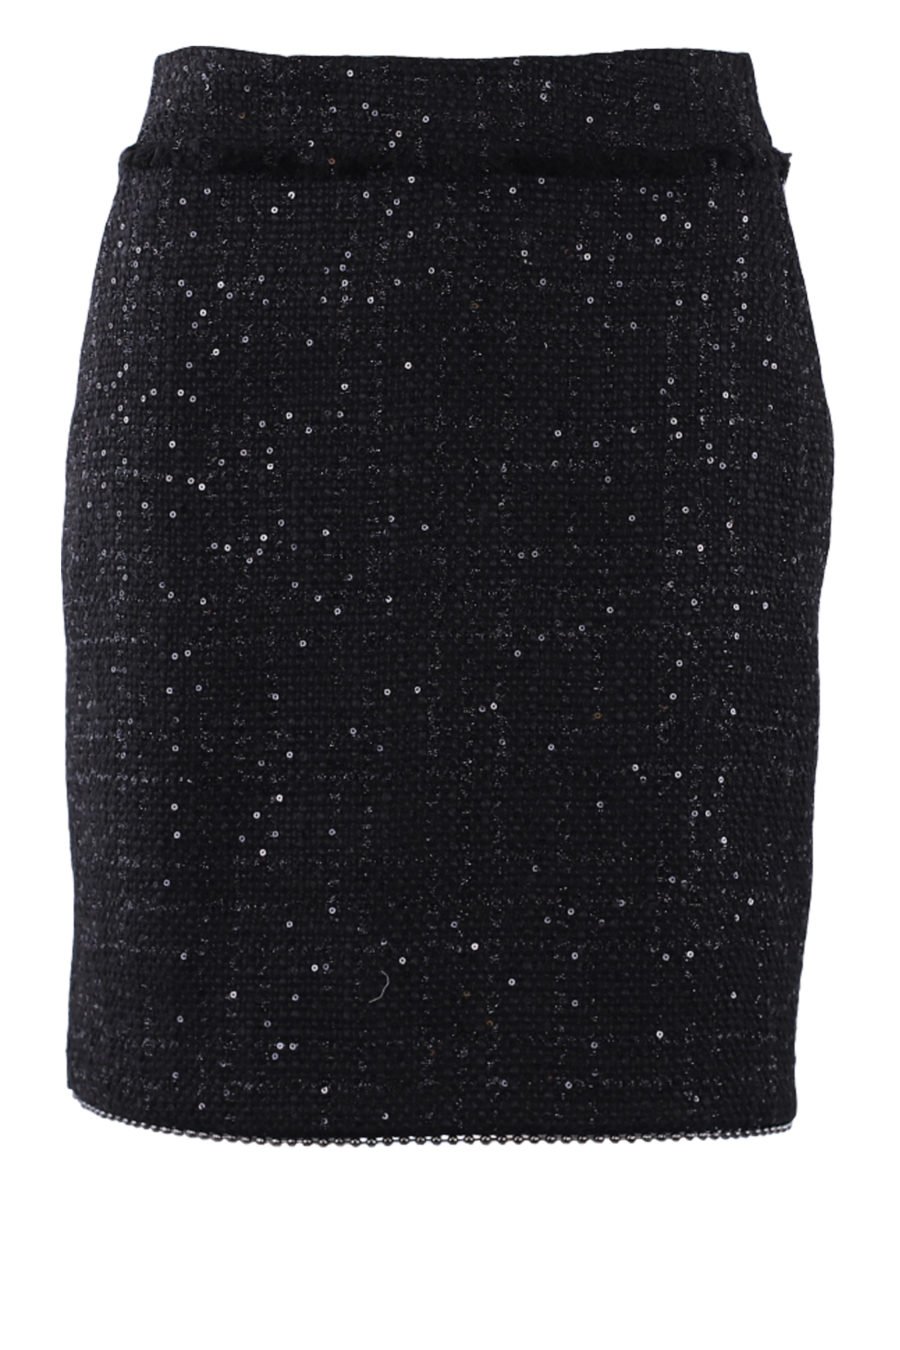 Falda negra con cinta de bouclé - IMG 0352